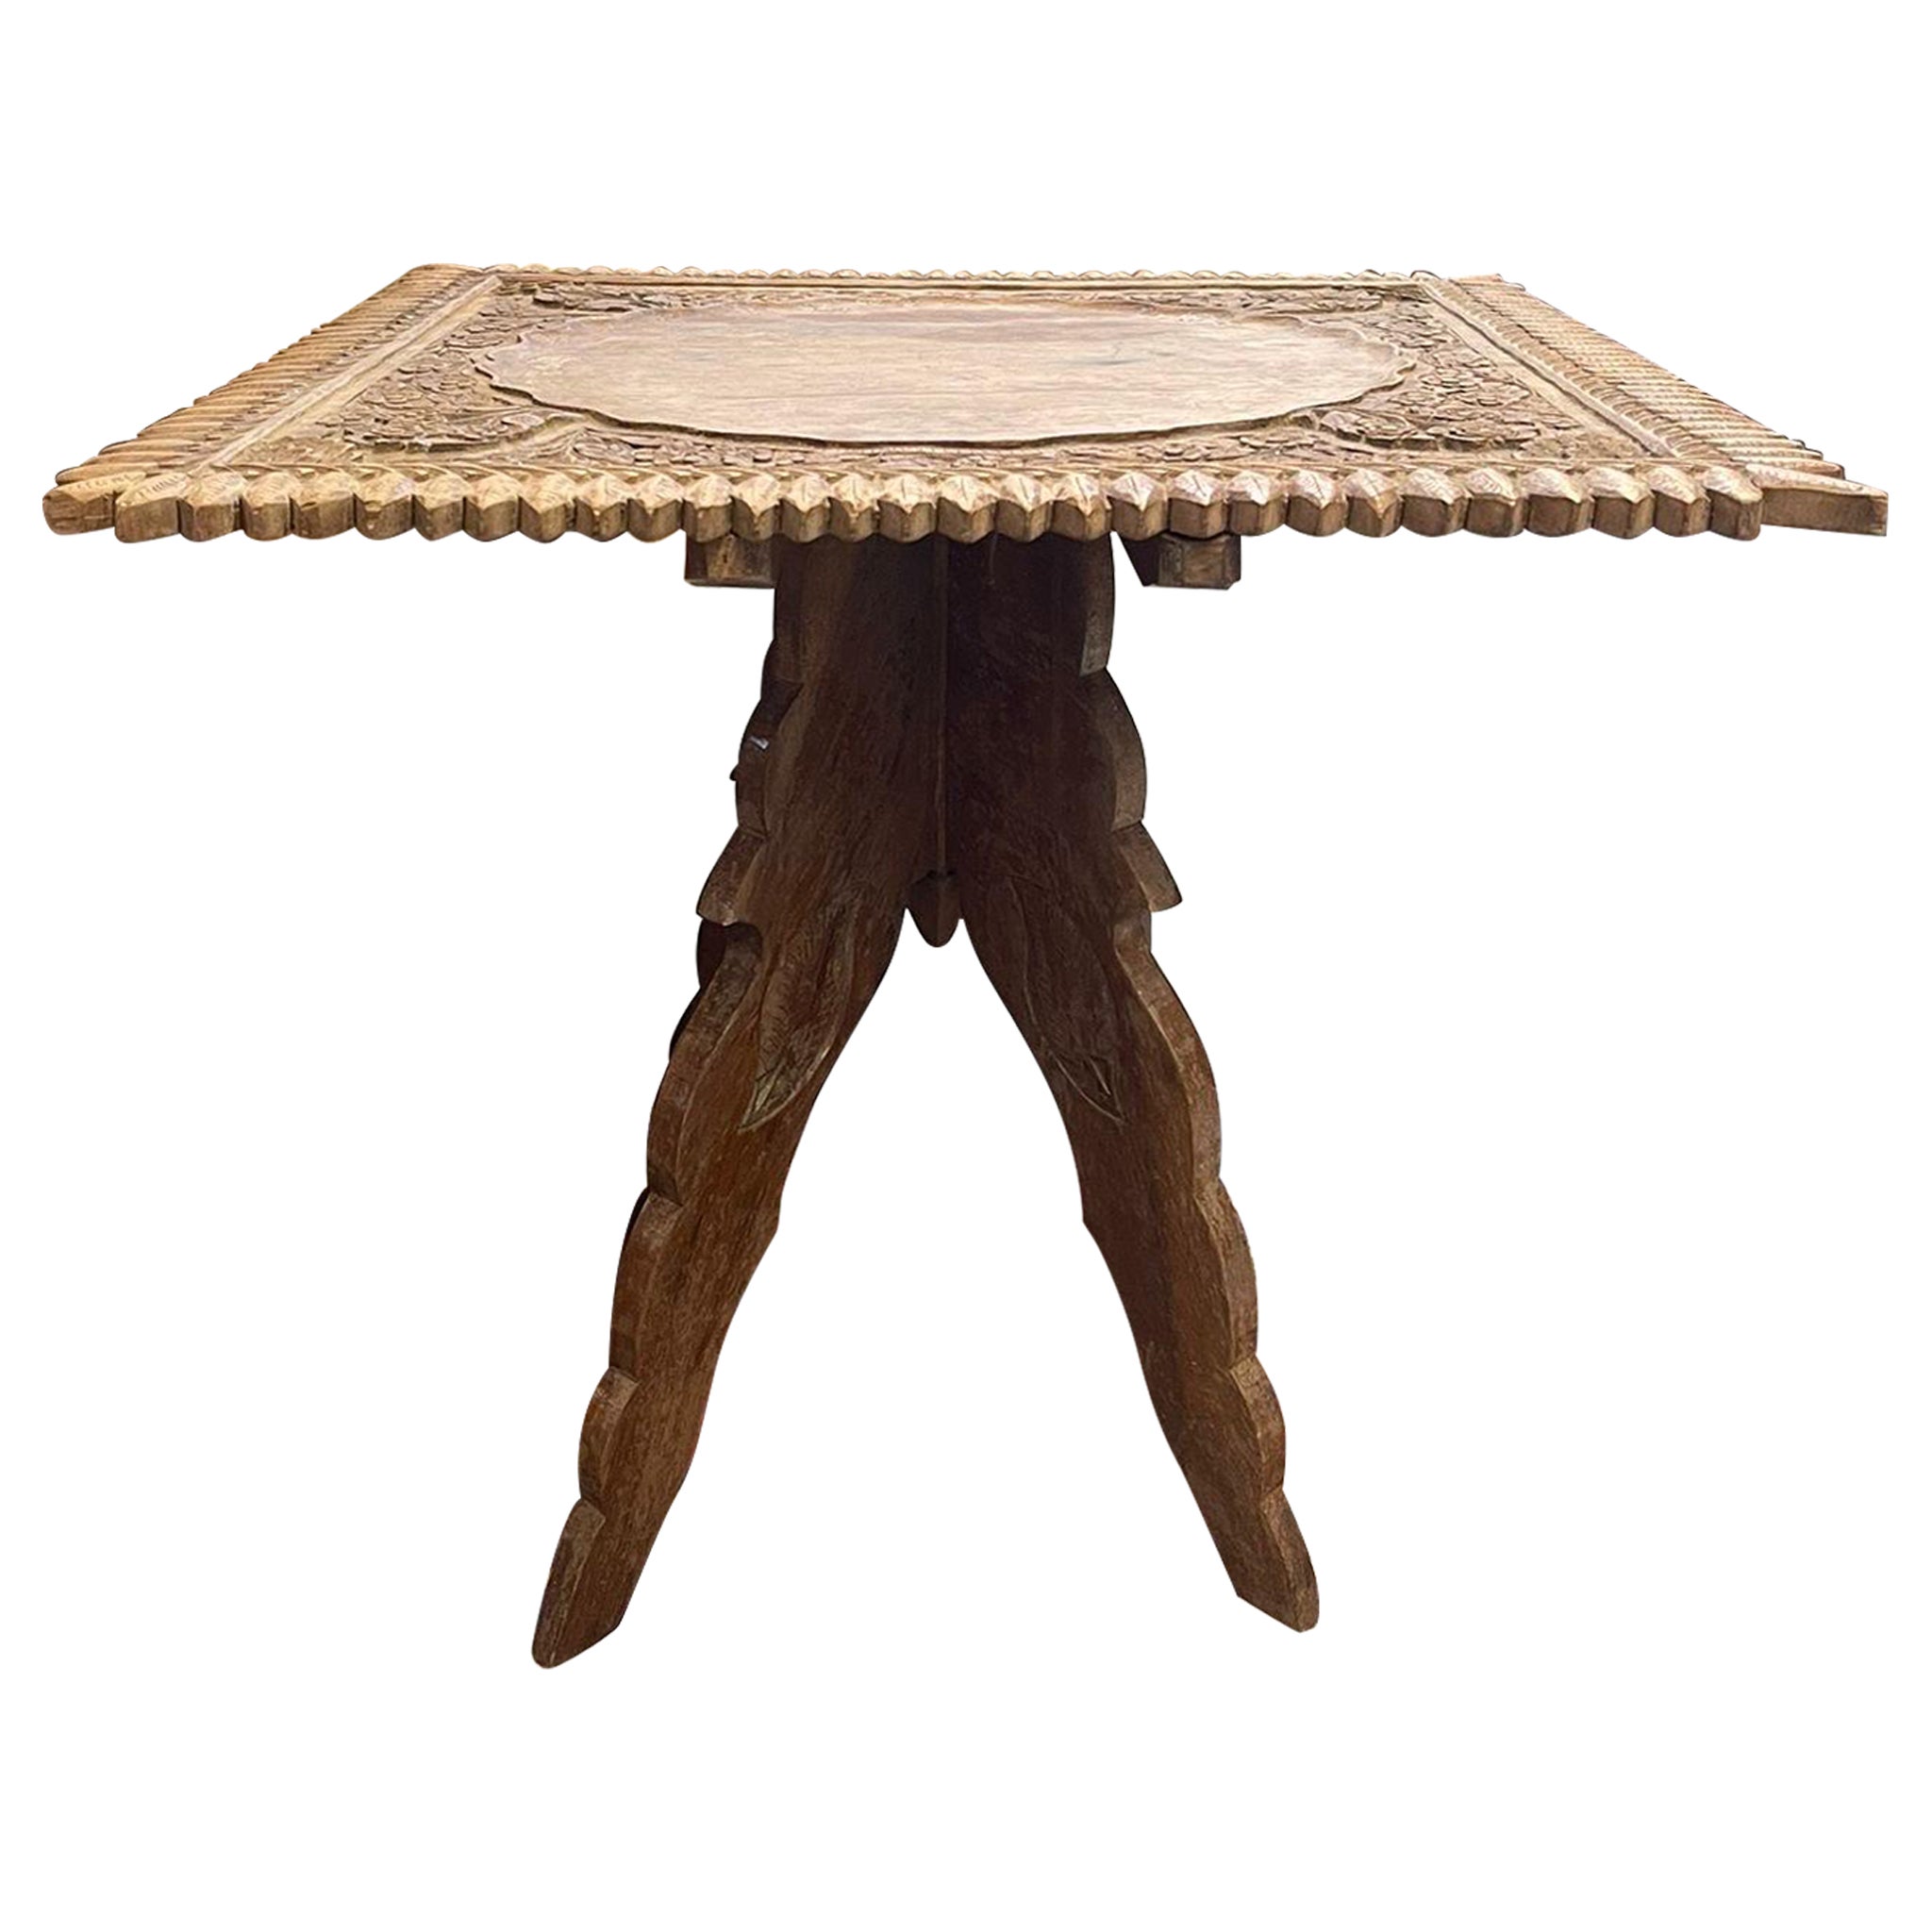 Vintage Carved Wood Side Table With Floral Motif. For Sale